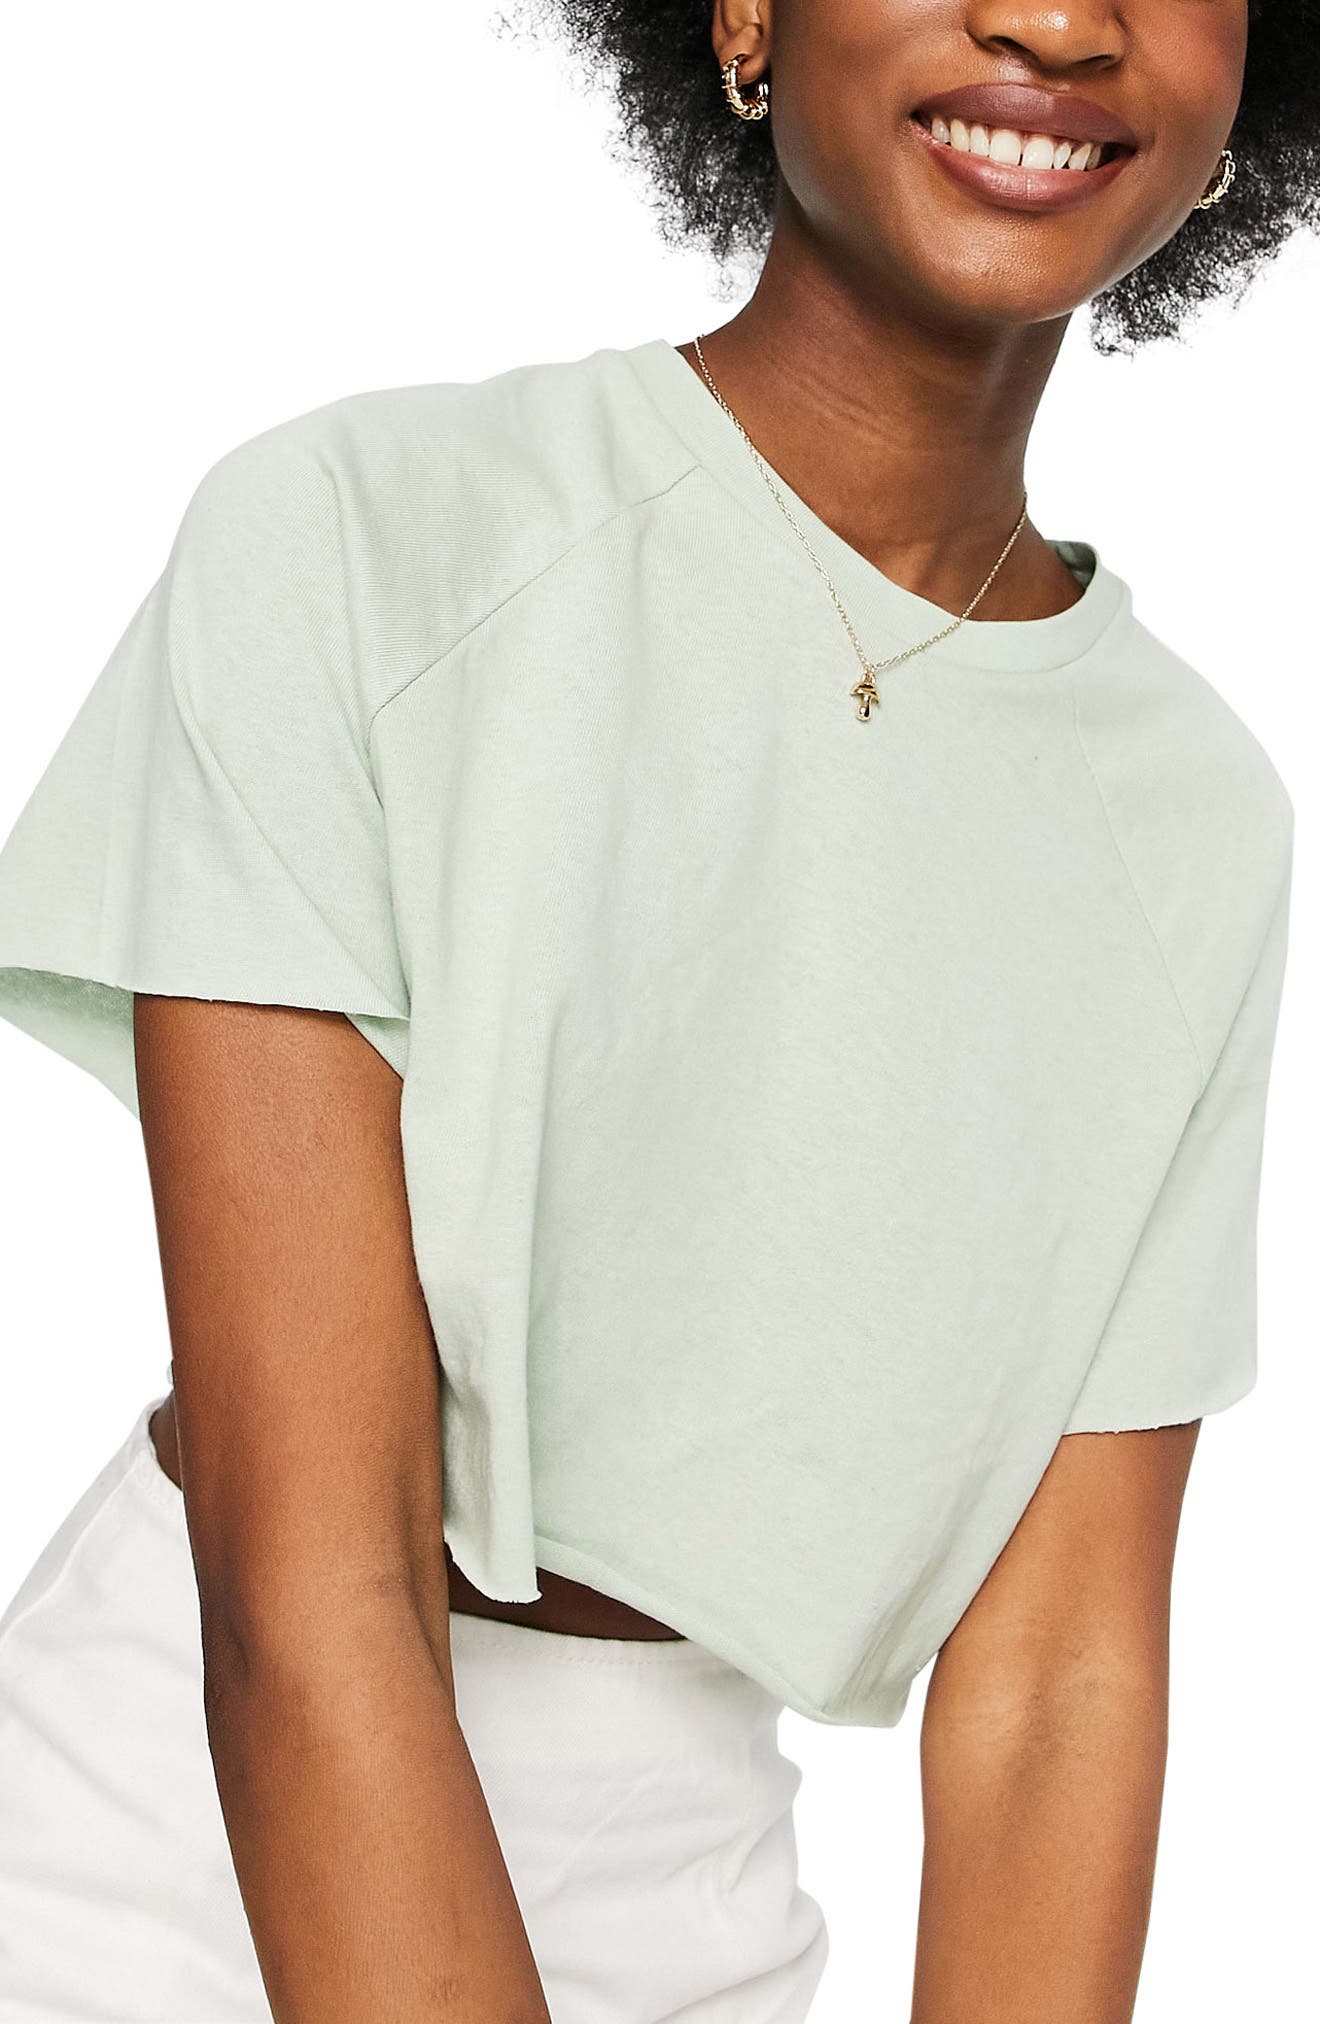 Damen Kleidung Tops & T-Shirts Shirts Topshop Shirts V Ausschnitt Shirt T Shirt grau topshop 